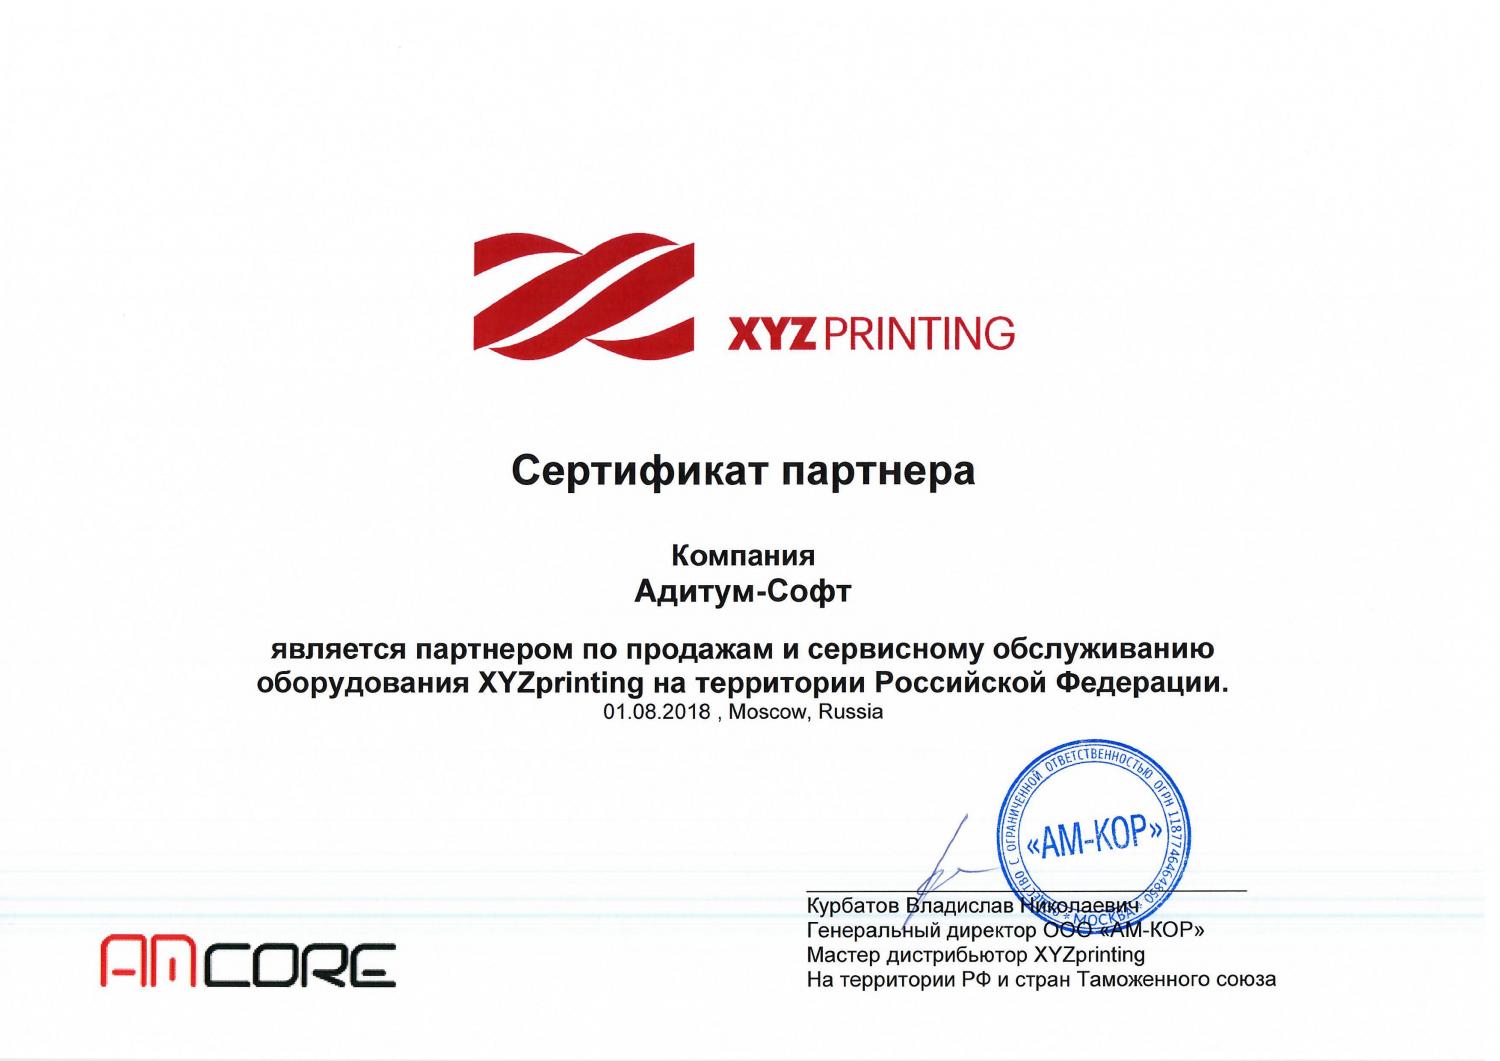 Сертификат партнера XYZ PRINTING